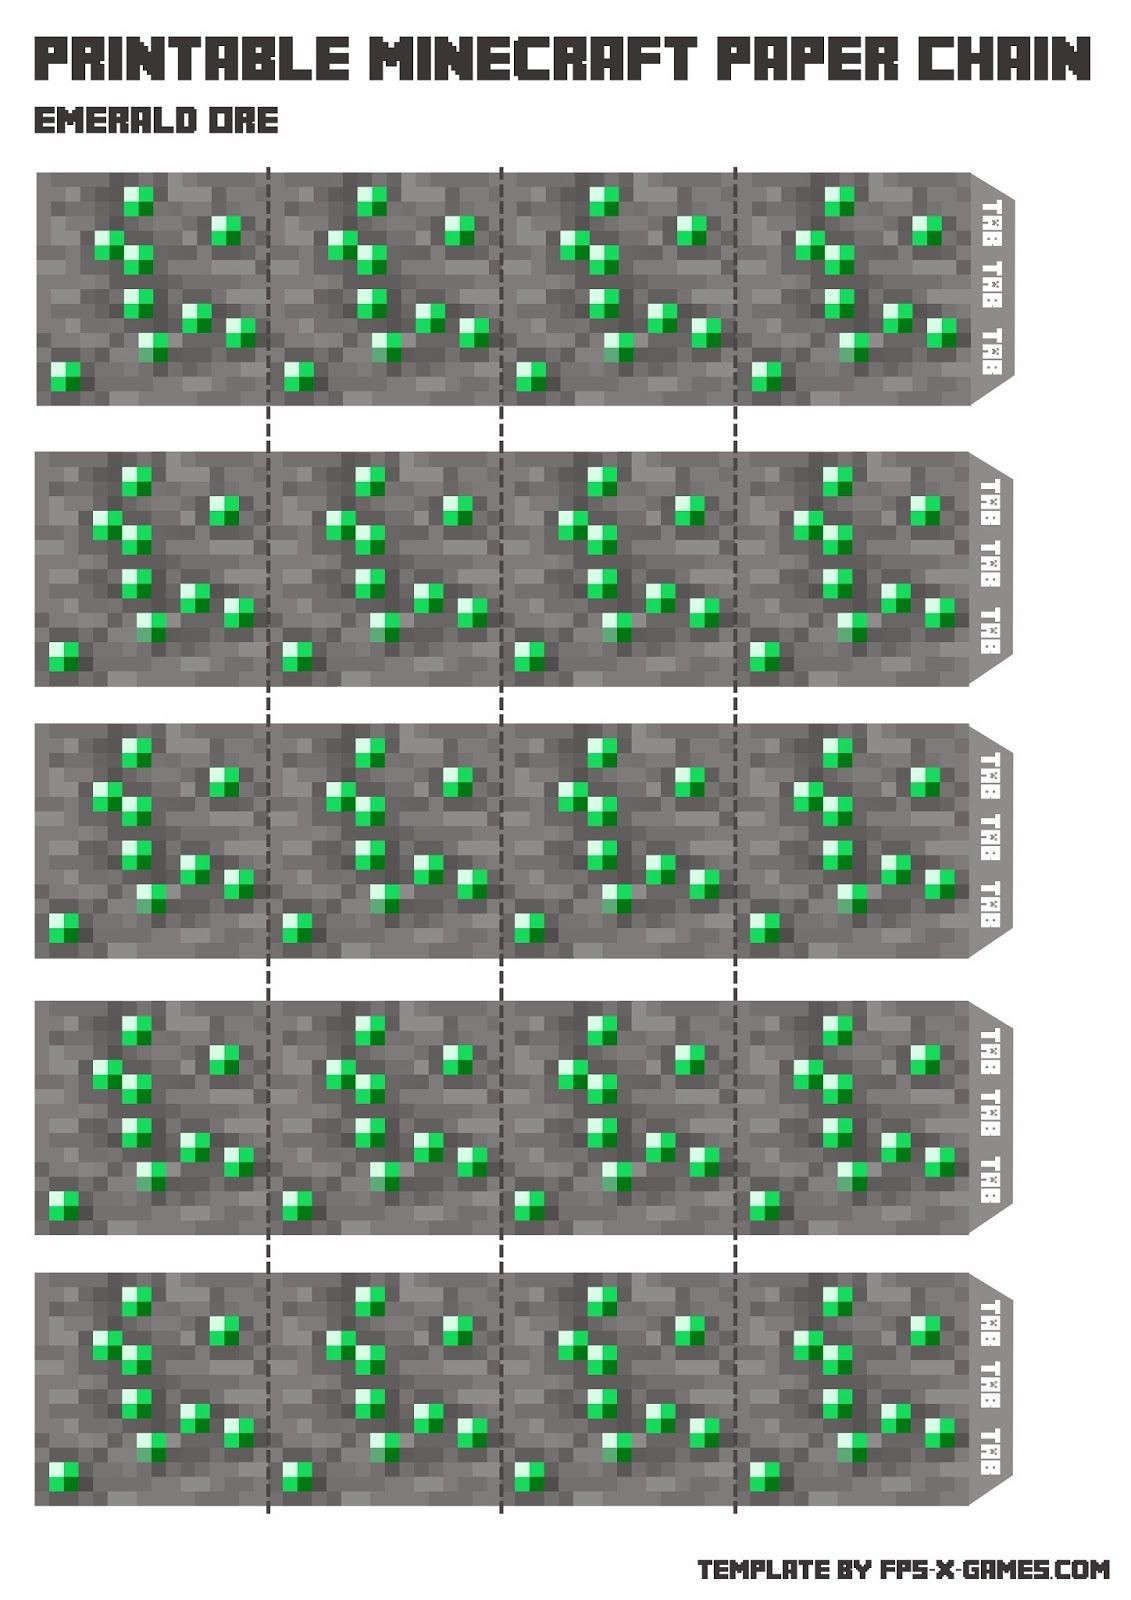 Mincraft Papercraft Minecraft Papercraft Chain Emerald ore